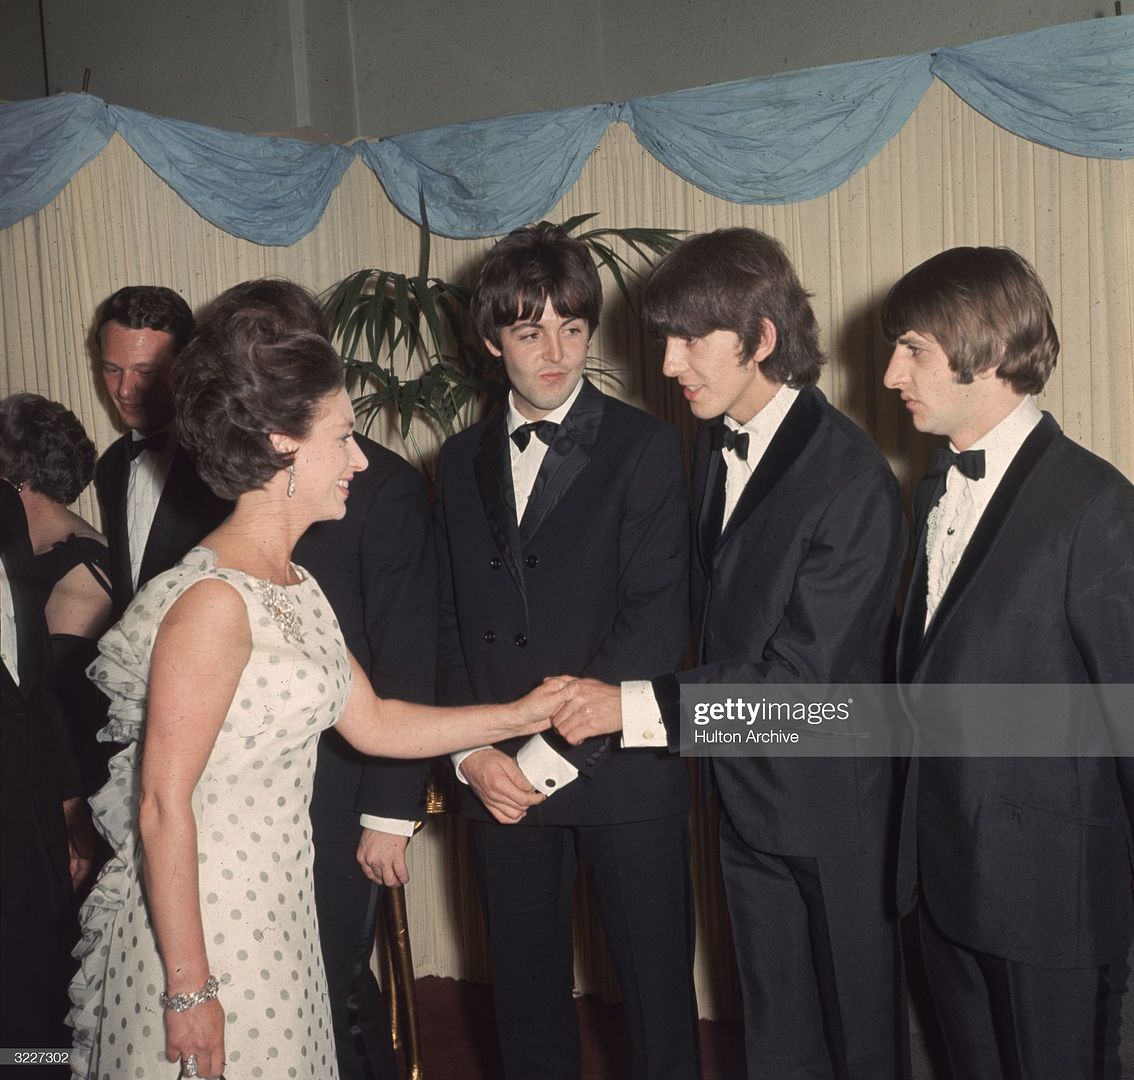 1965_29_July_gettyimages-3227302-large_diamond_bracelet_Beatles